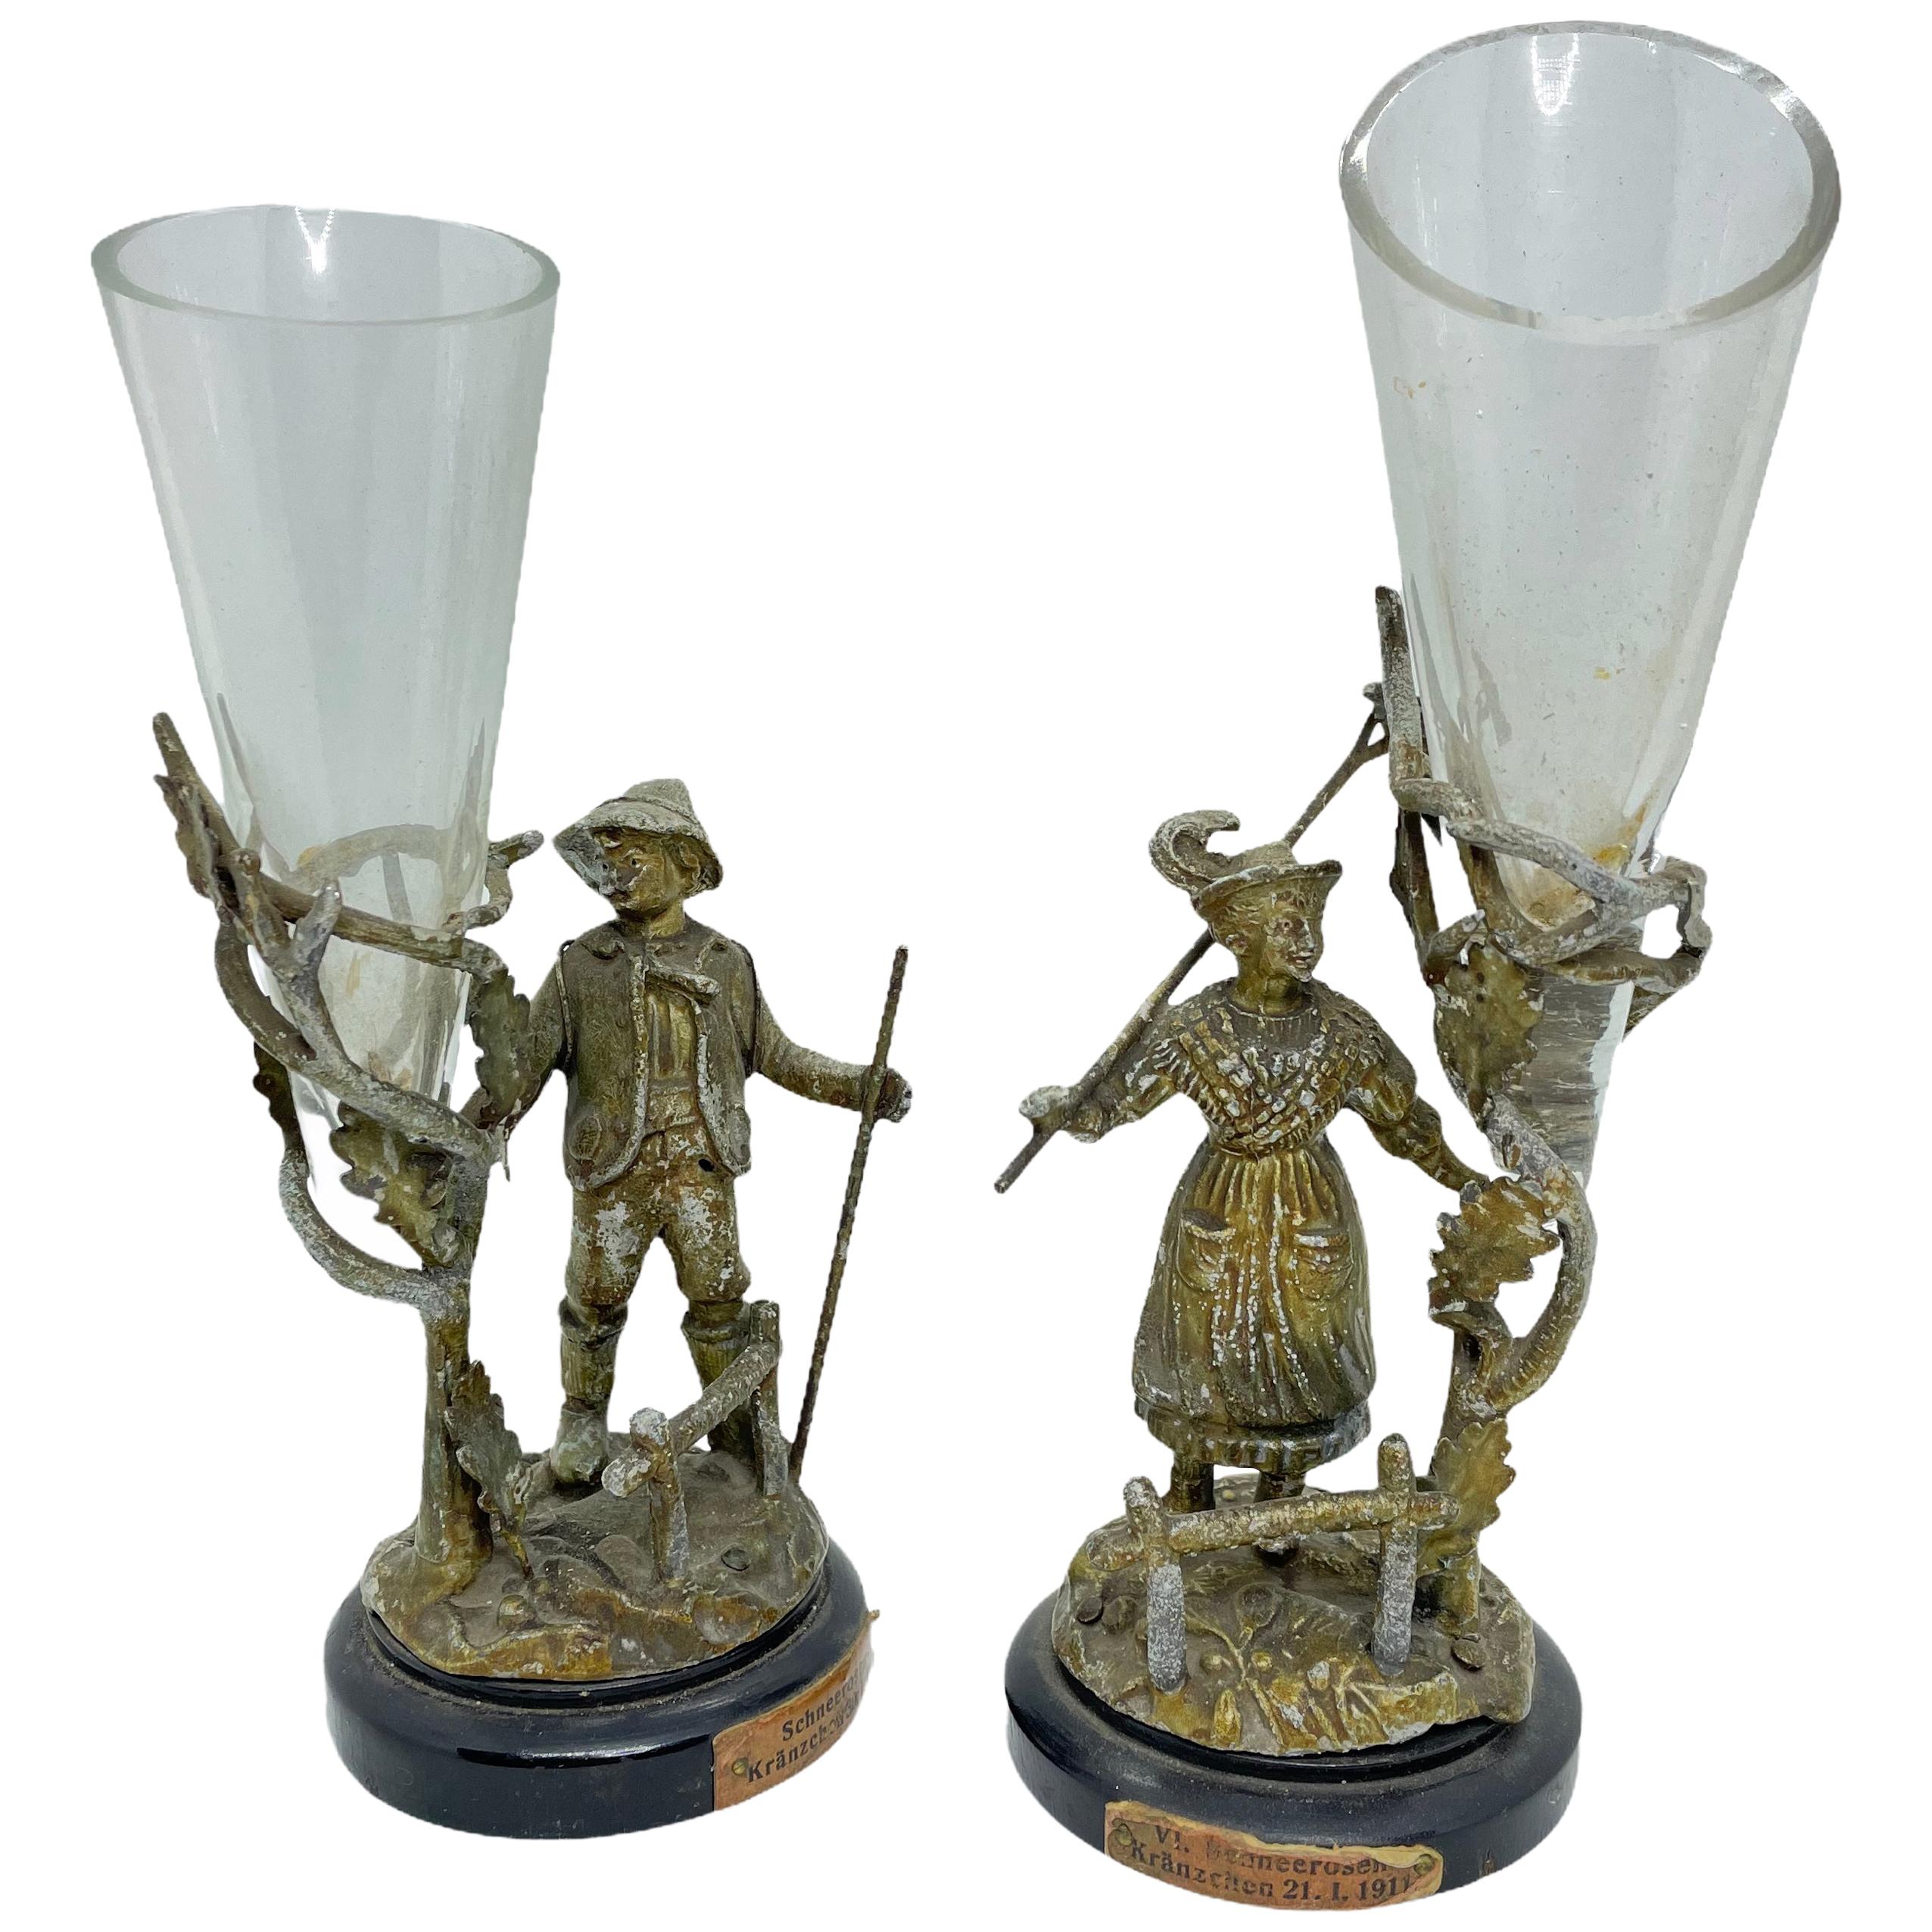 Pair of Rare Early 20th Century Austrian Vienna Bronze Figure Vases, Antique